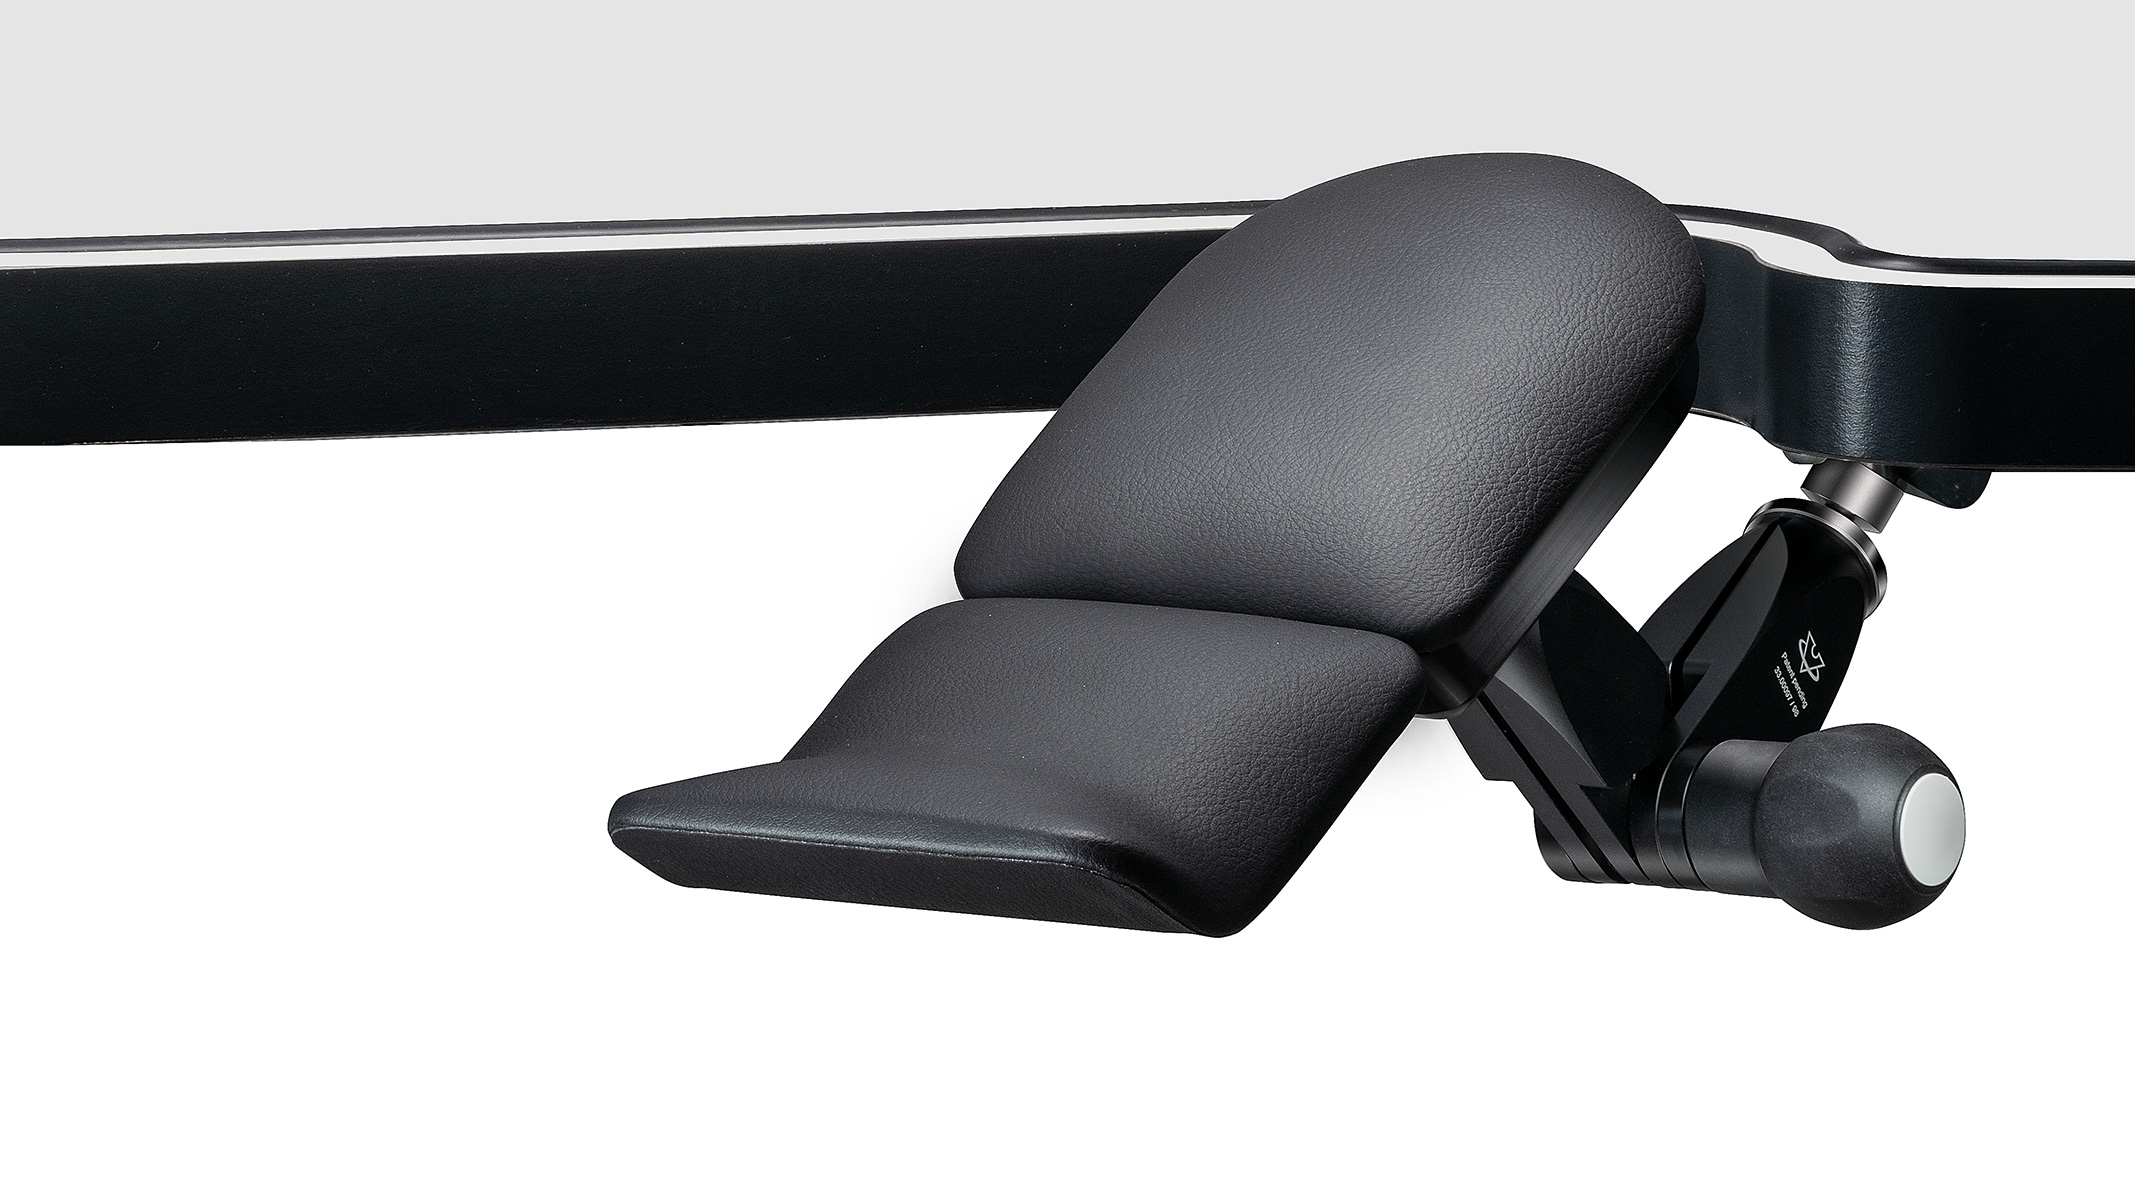 VOH Armrests, length dynamic from 280 - 350 mm, 3D adjustable, black, special equipment for Ergolift
Evolution (Ergo Suite, swiss patent)